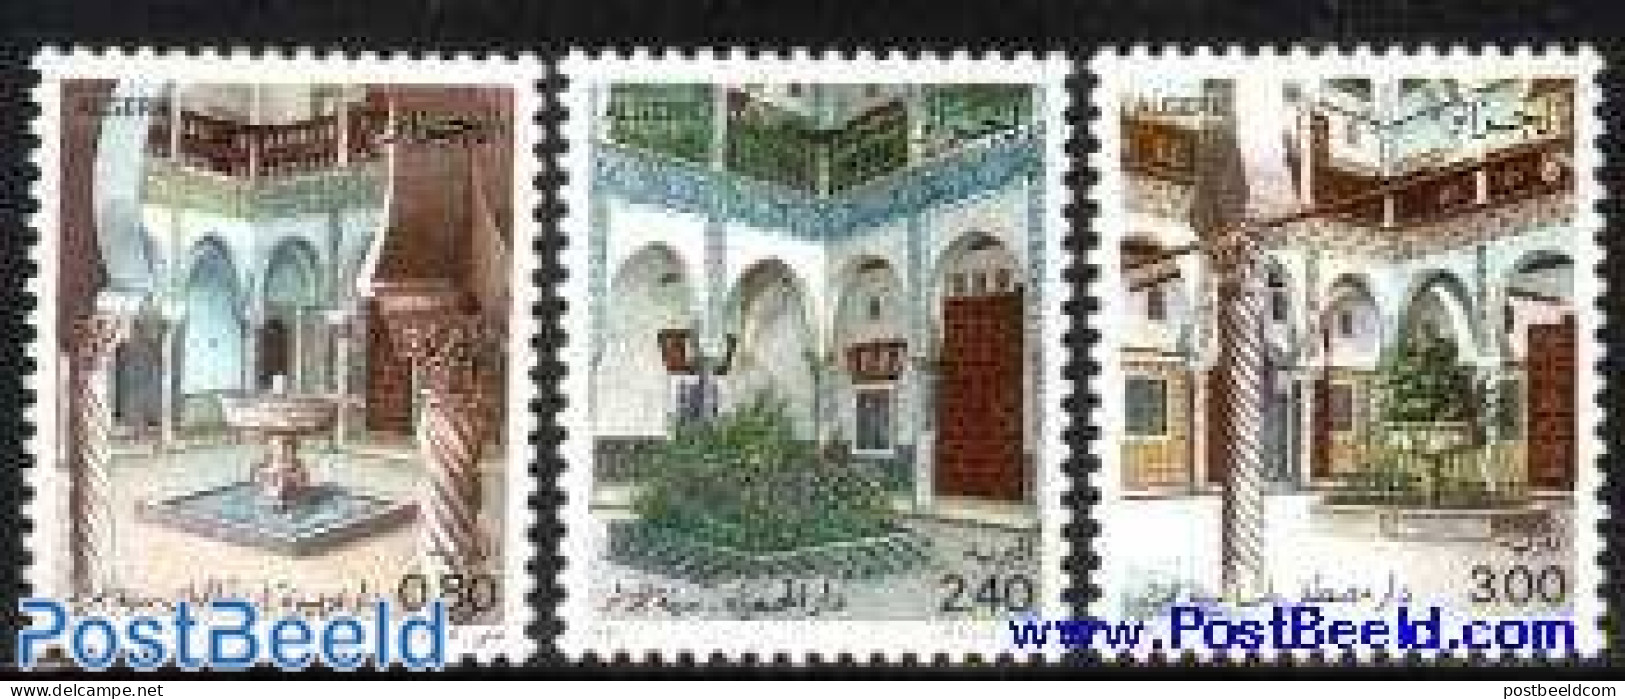 Algeria 1986 Patios 3v, Mint NH - Unused Stamps